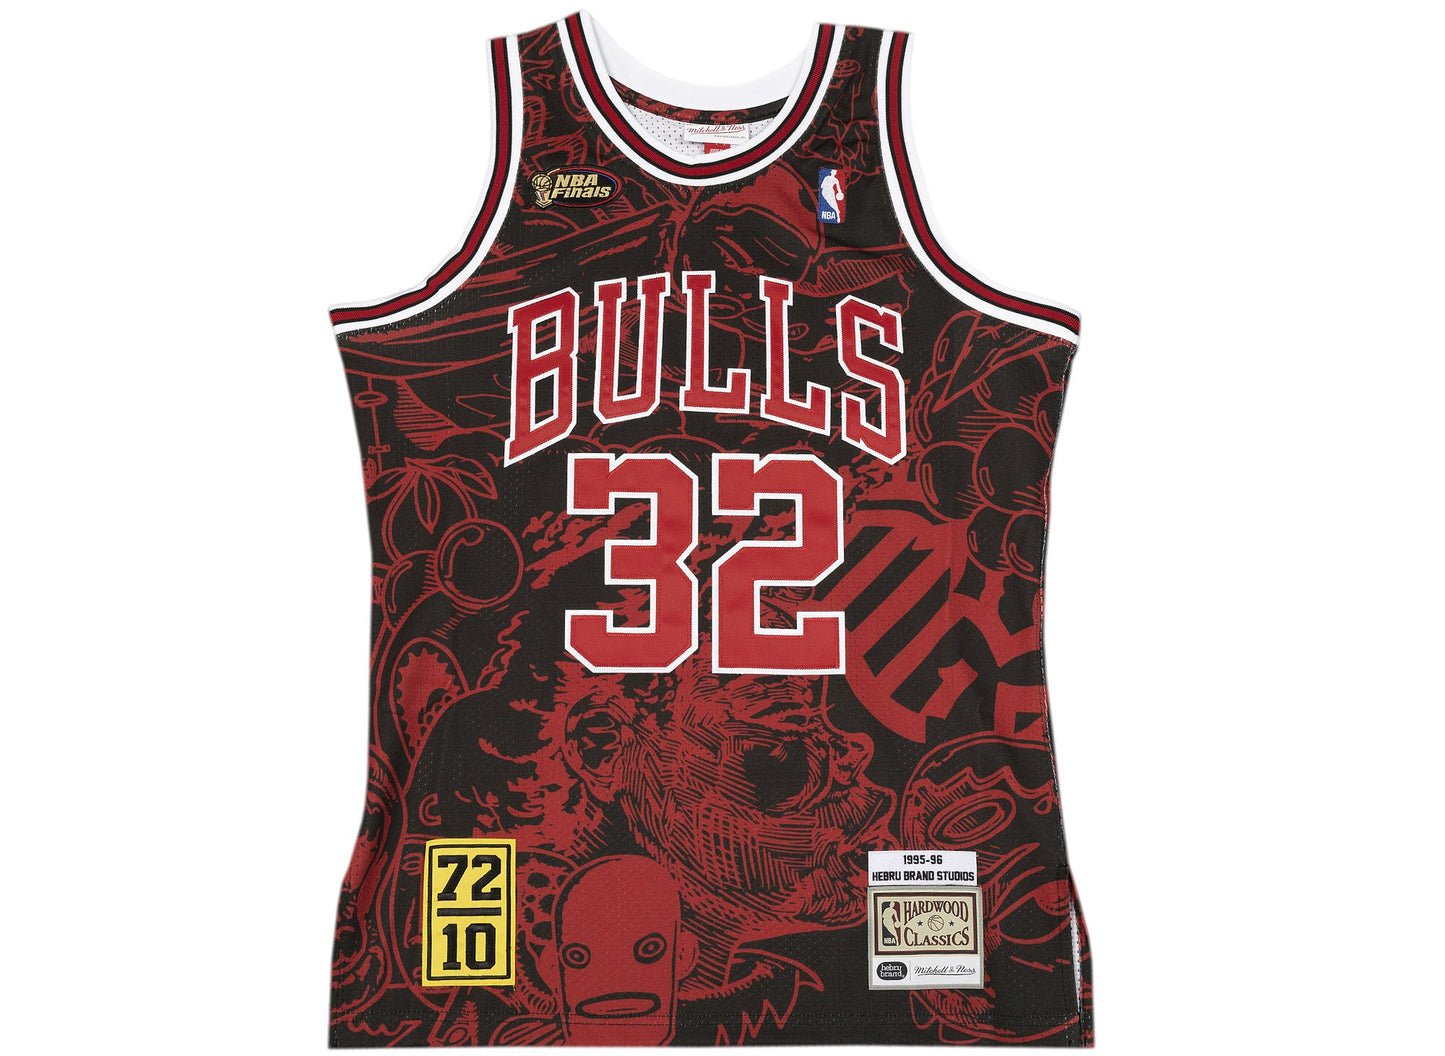 Mitchell & Ness x Hebru Brantley NBA Bulls Jersey